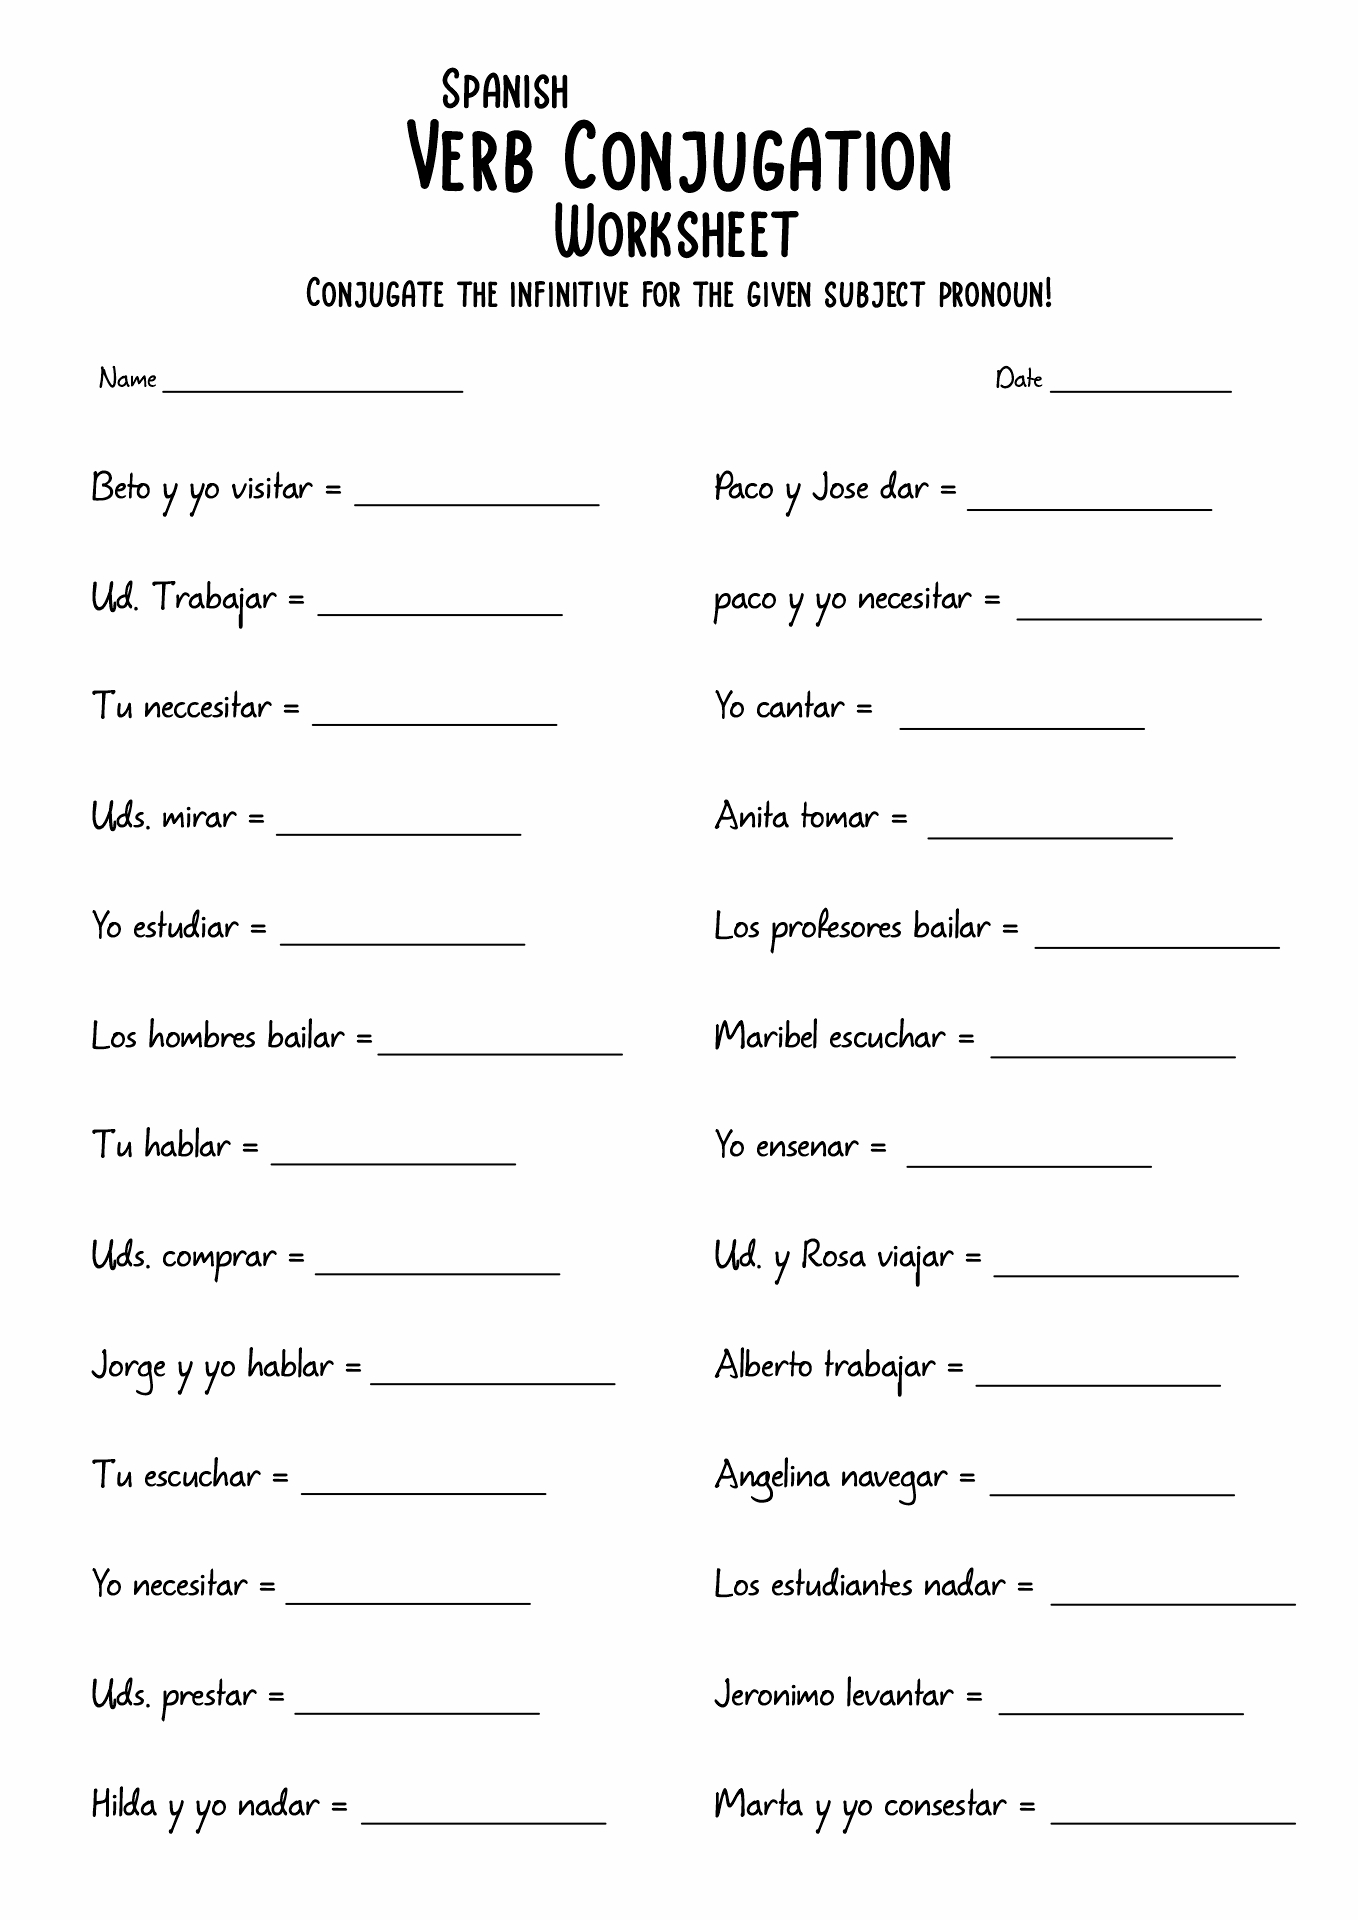 18-best-images-of-spanish-verb-worksheets-spanish-verb-conjugation